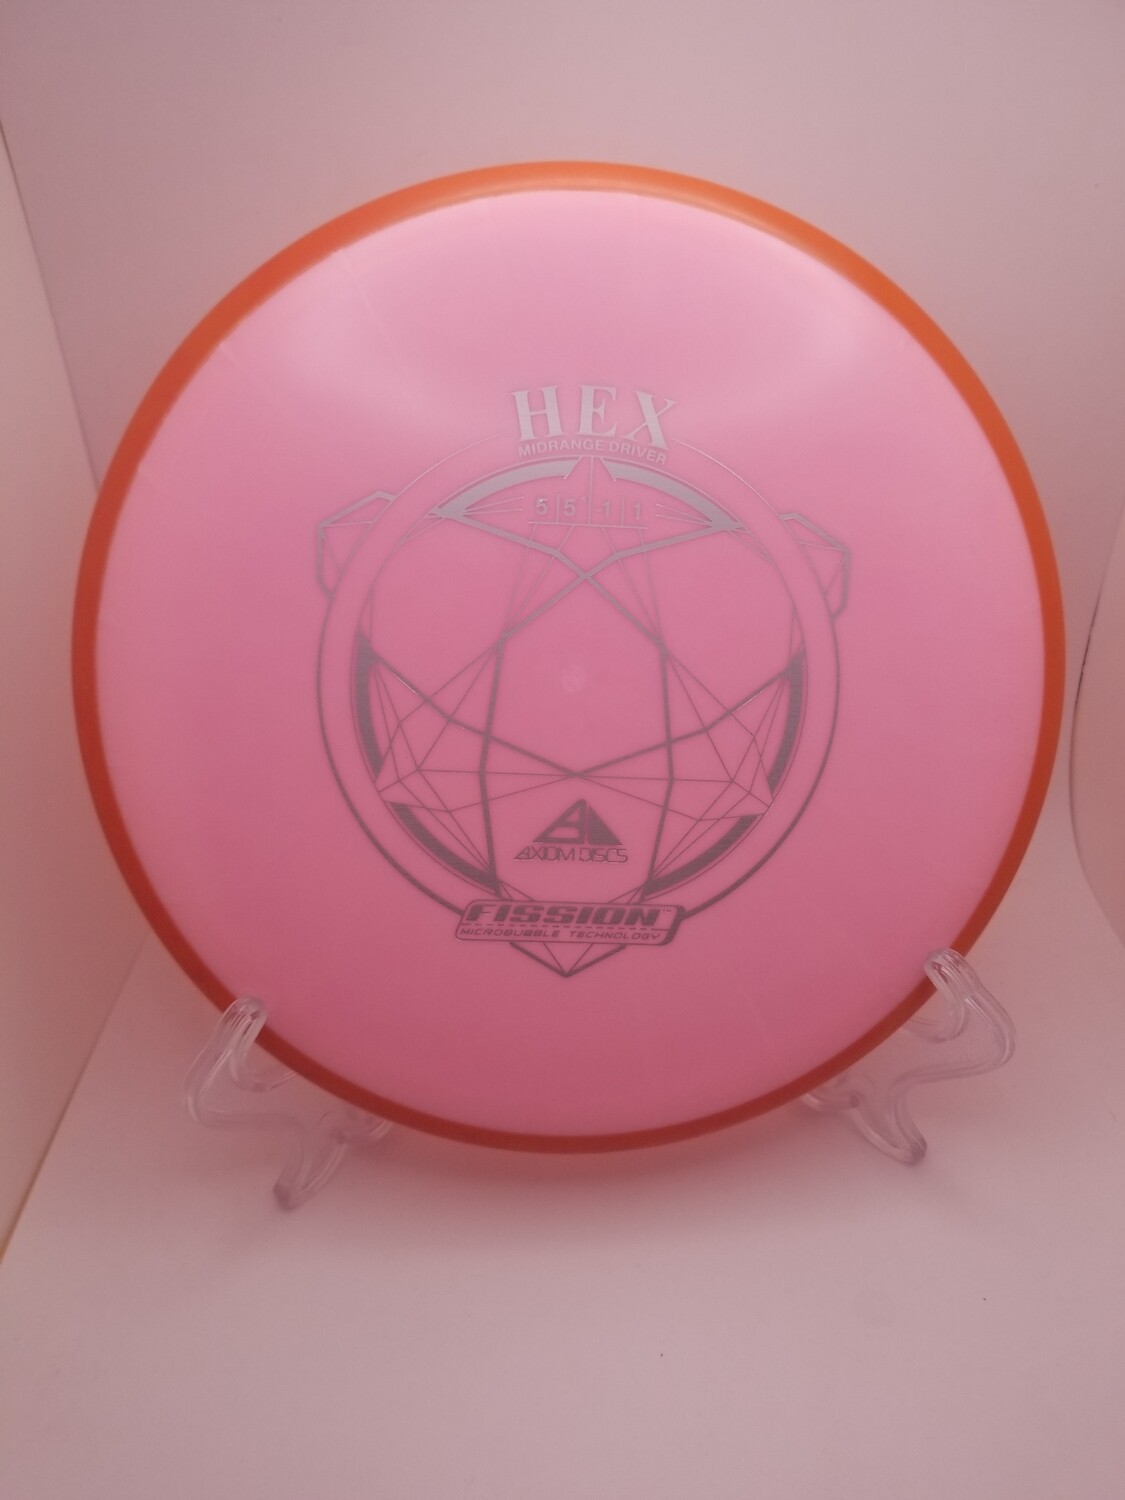 Axiom Discs Hex Fission Pink Plate Orange Rim 178g